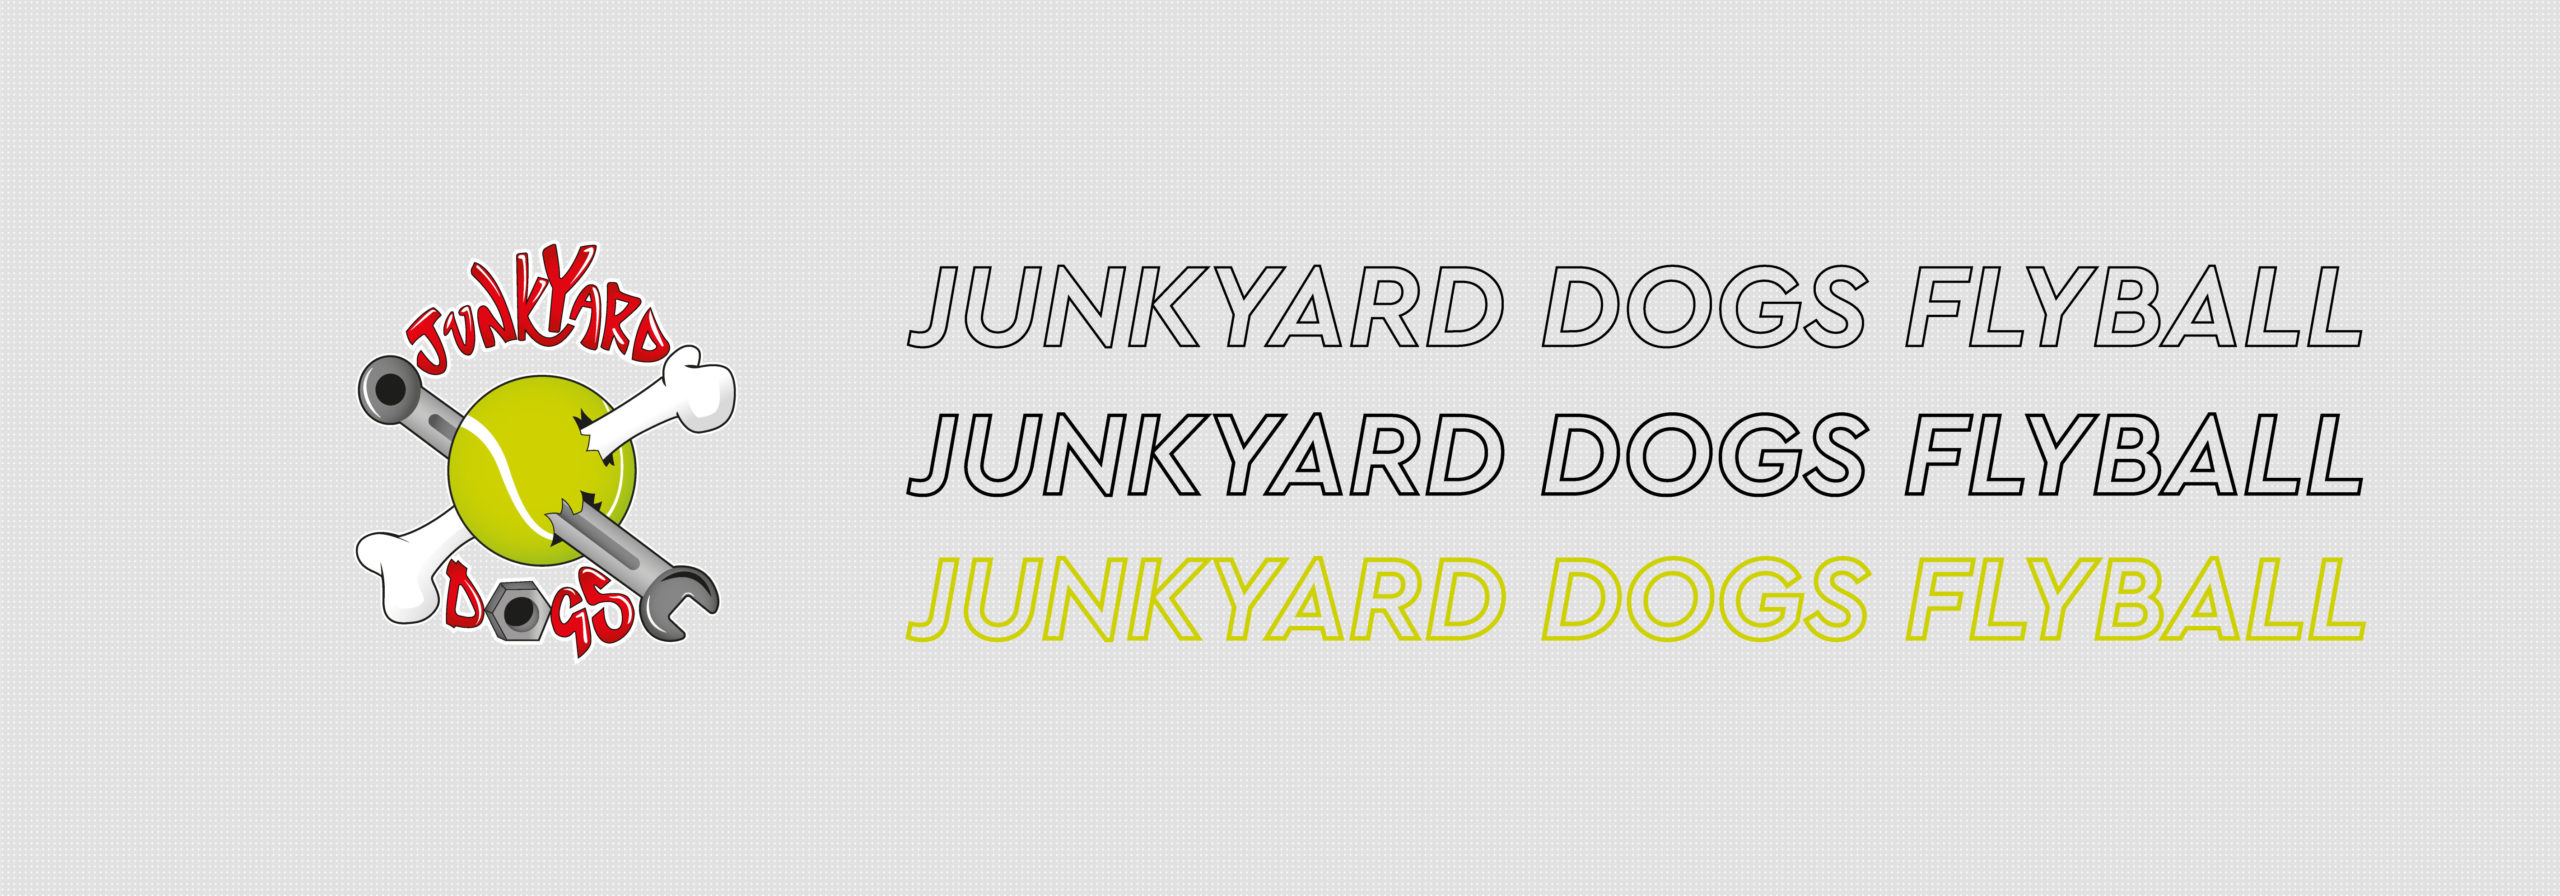 Junkyard Dogs Polo Shirt